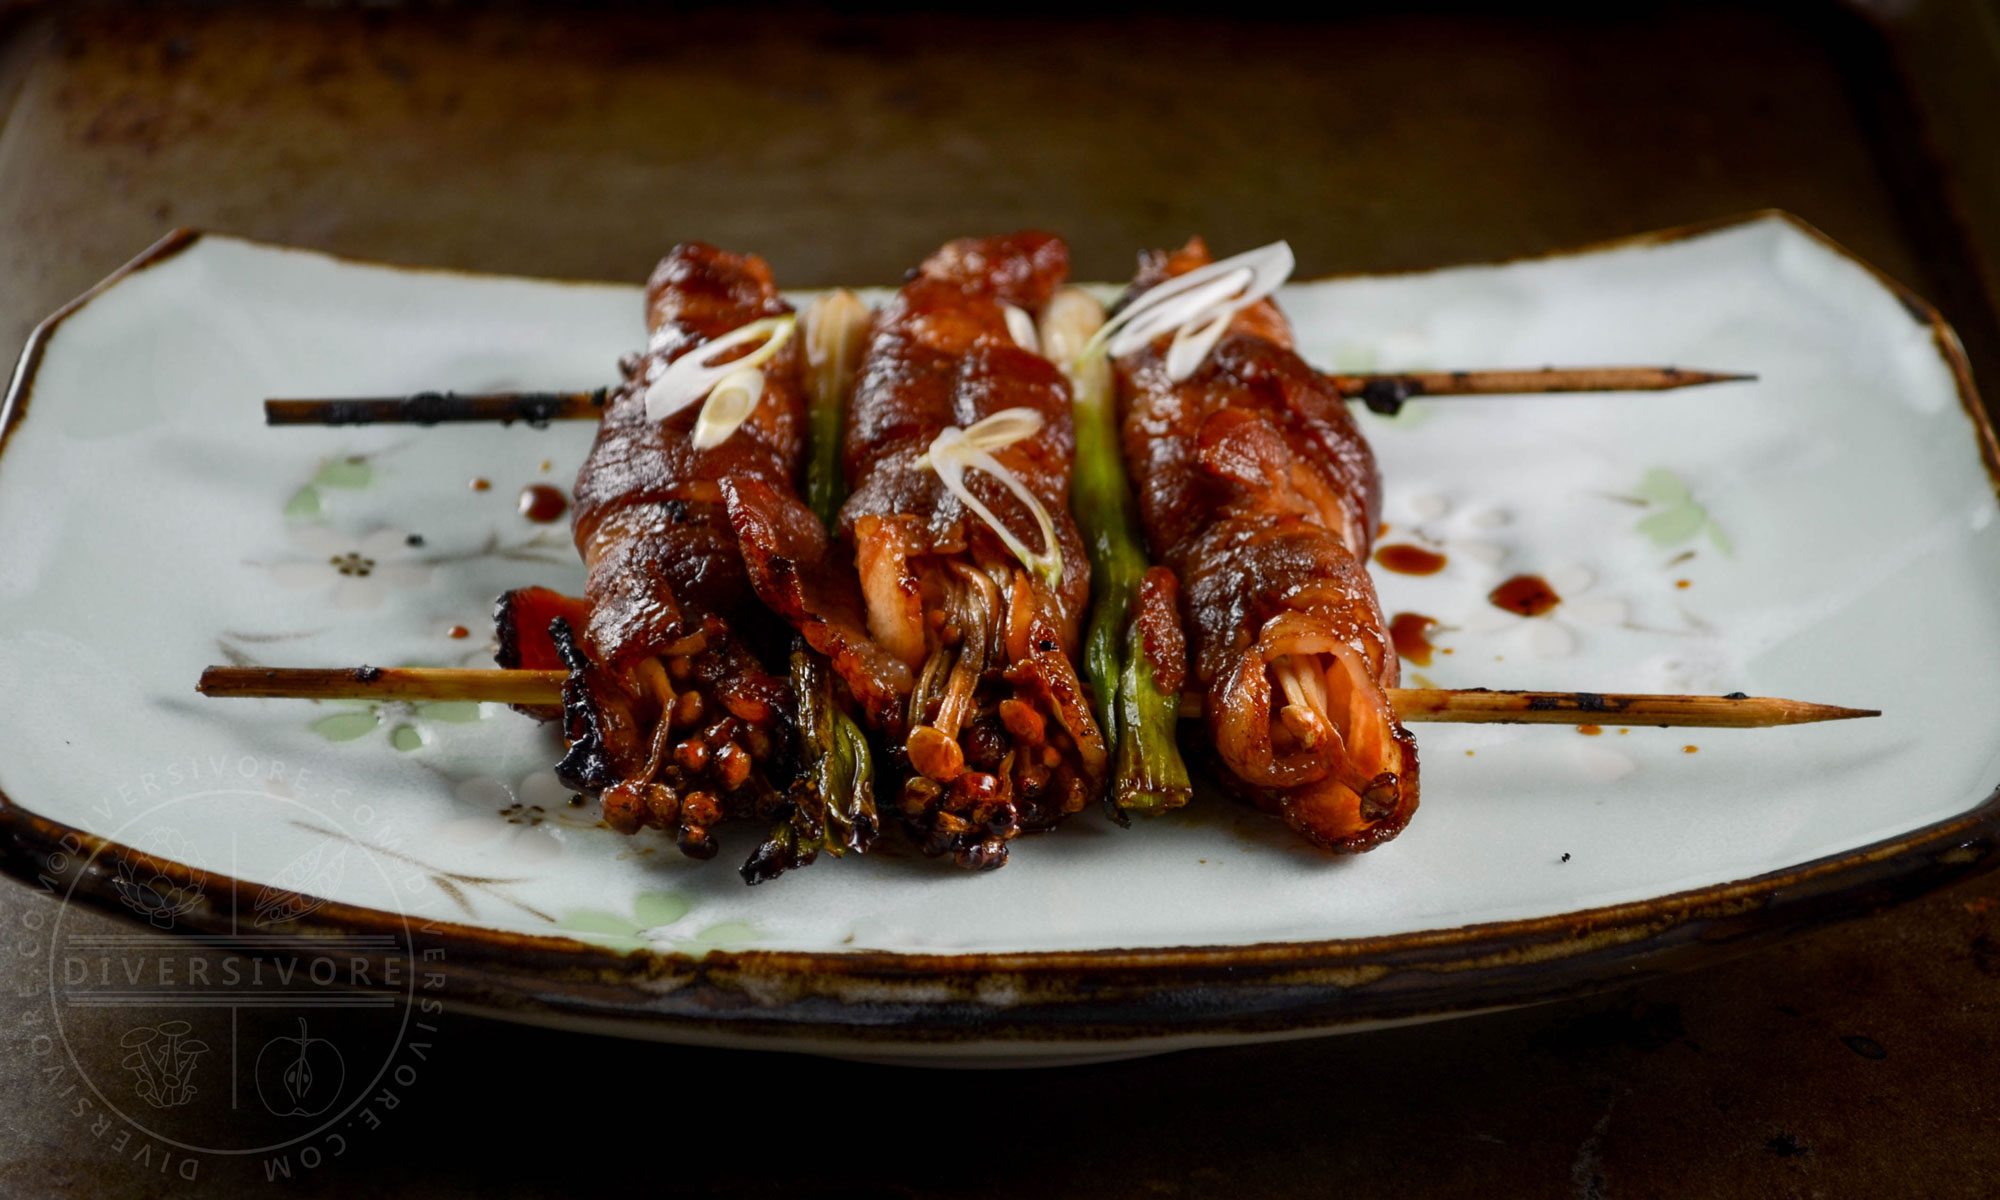 Featured image for “Bacon-Wrapped Enoki Mushrooms with Maple-Sake Glaze”